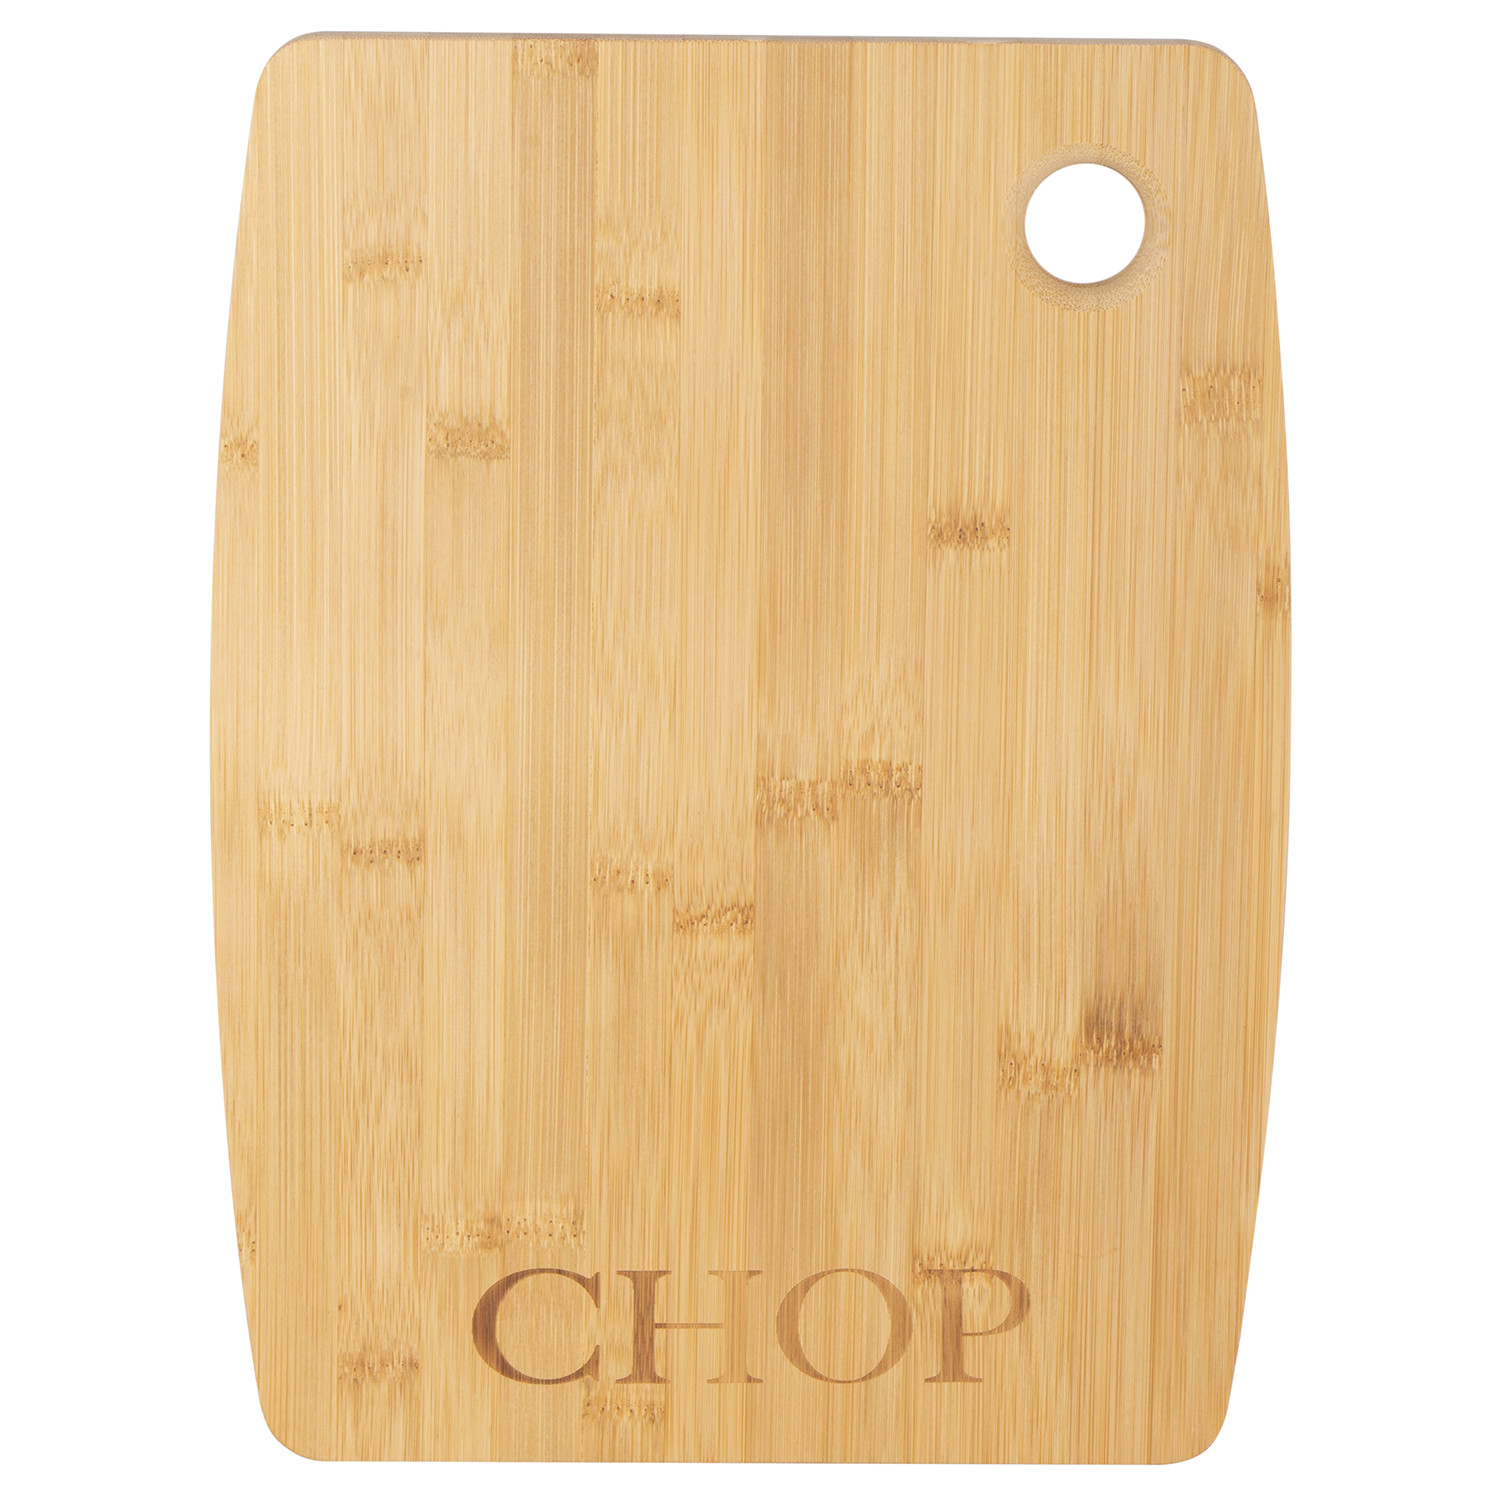 Chop Slogan Bamboo Chopping Board Image 1